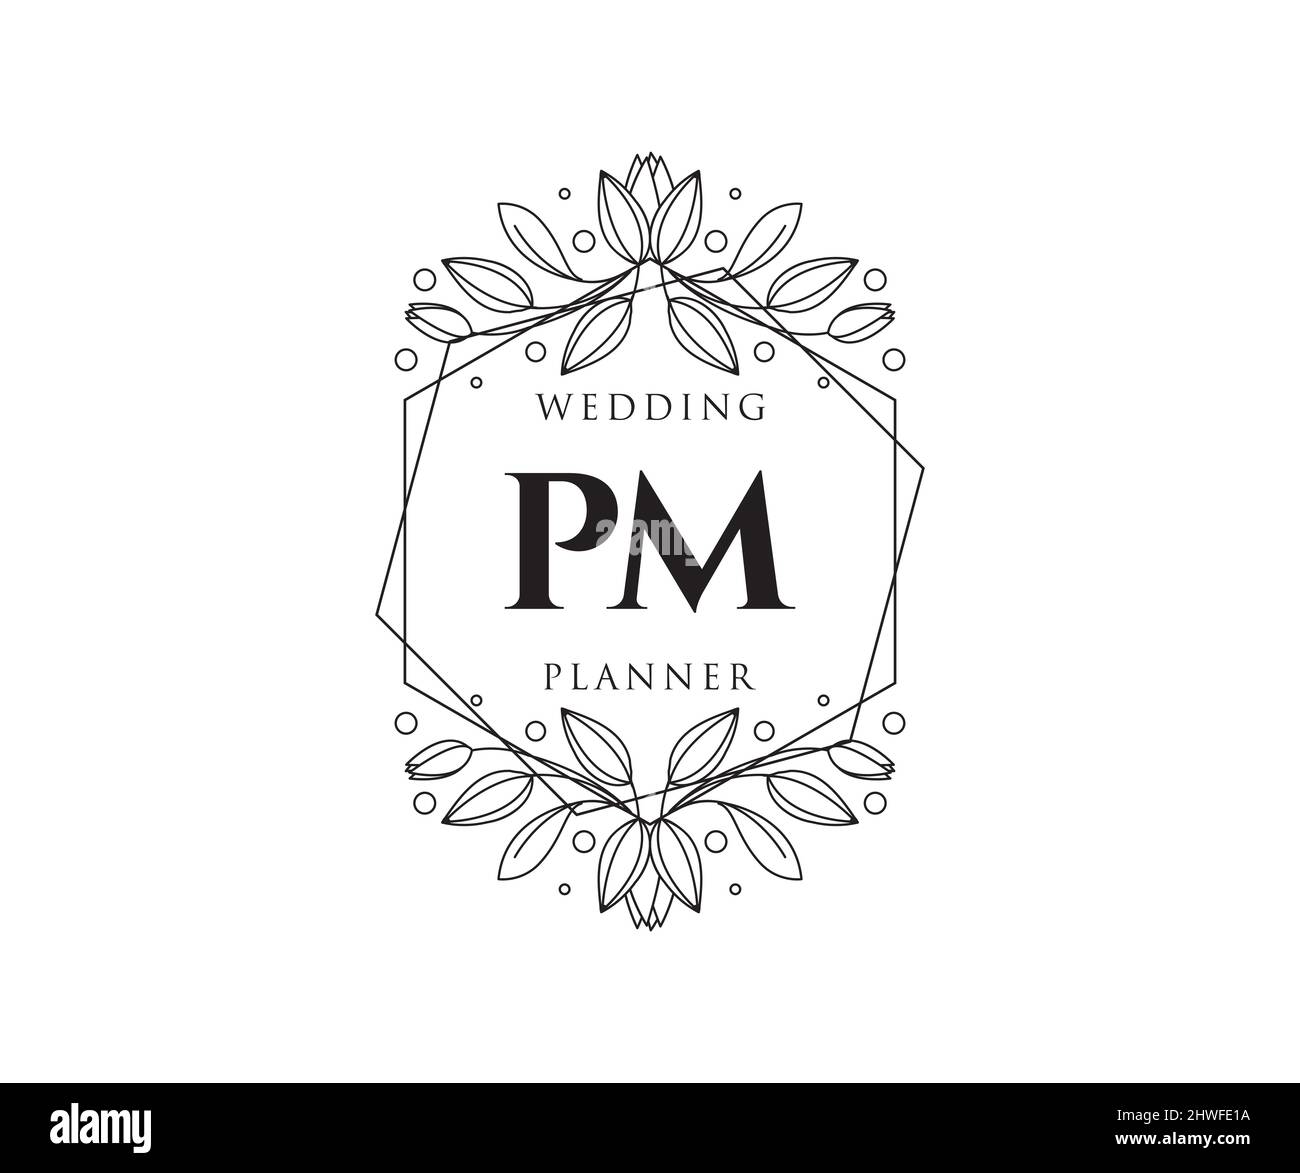 Pm initial wedding monogram logo Royalty Free Vector Image